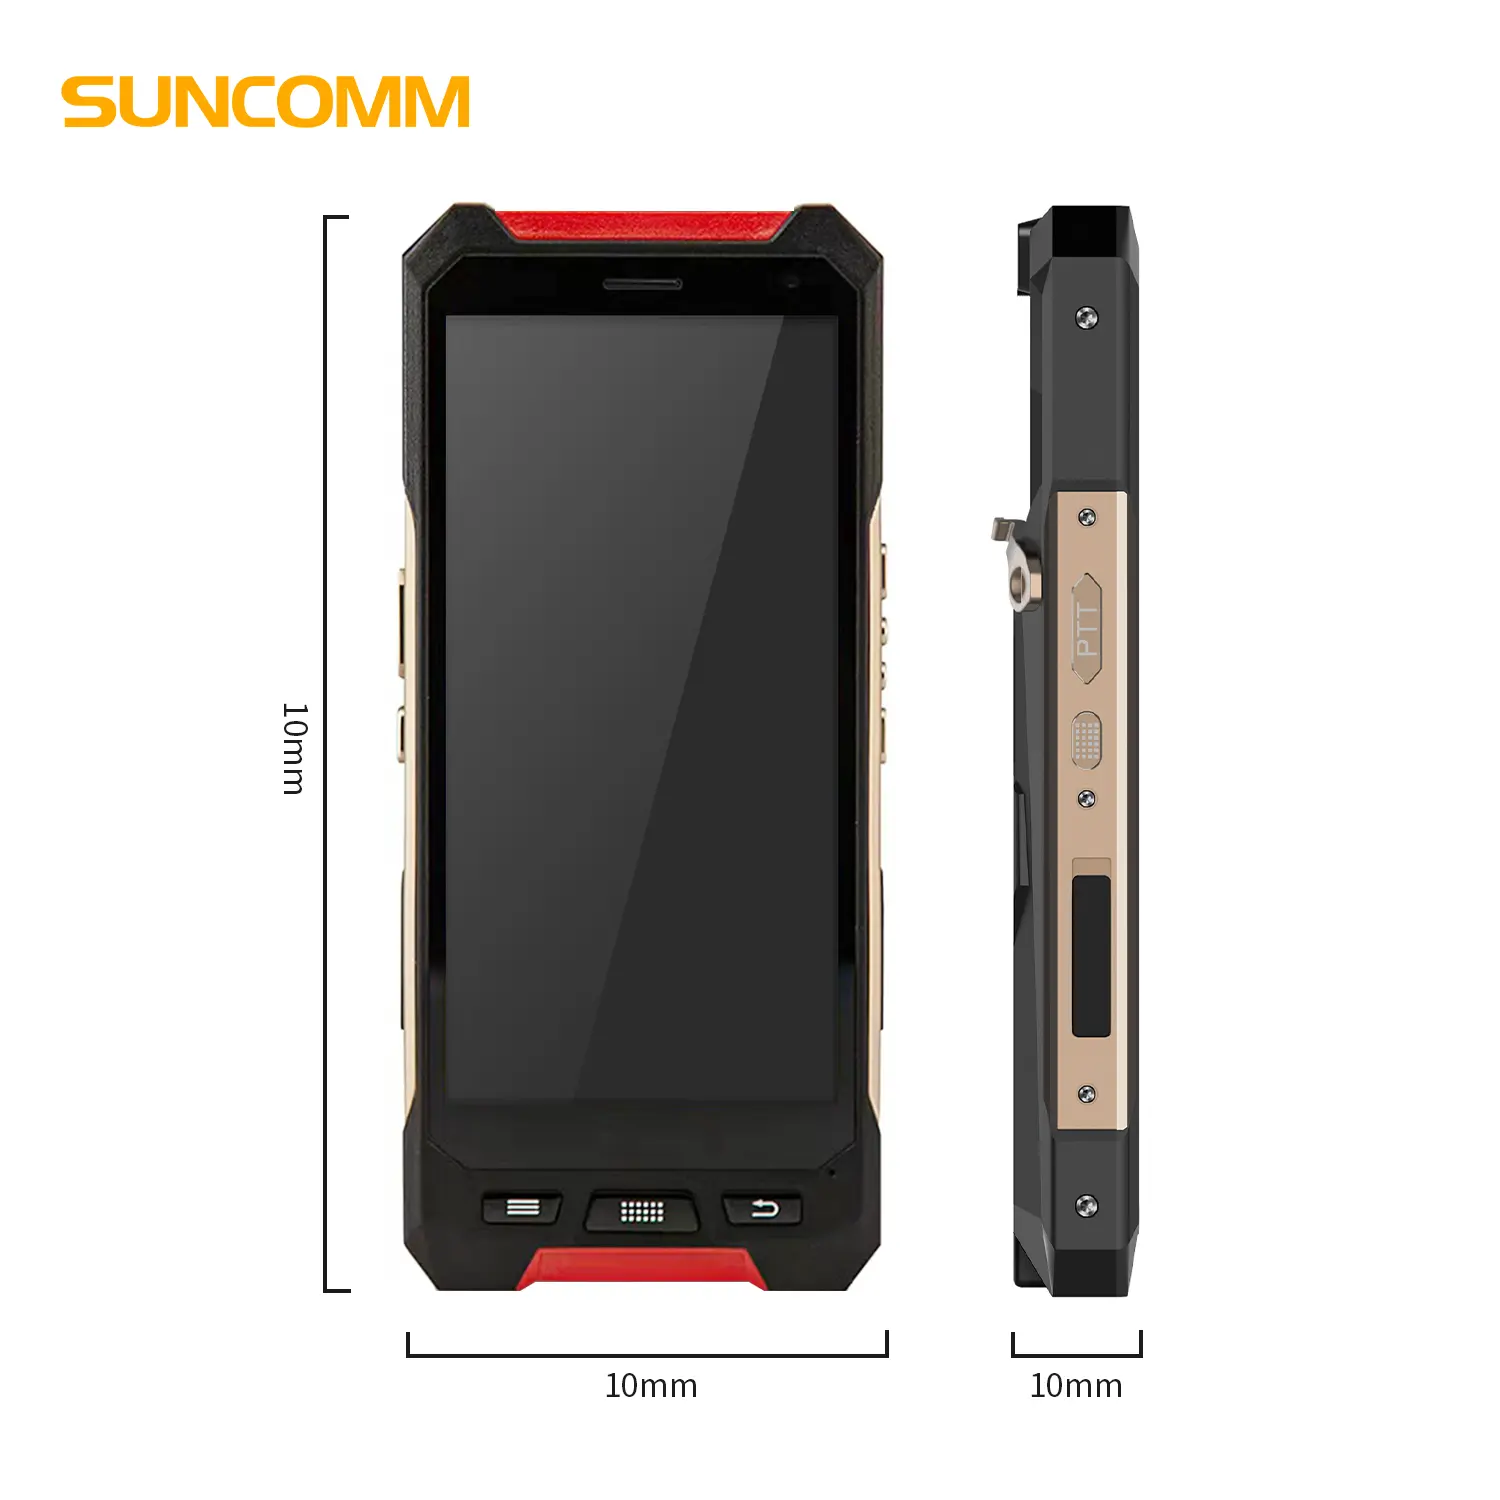 Best Beoordeelde Suncomm R530c Barcodescanner Telefoon 6.0 Inch Touchscreen 6000Mah 4G Lte 1d/2d Psam Nfc Handheld Pdas